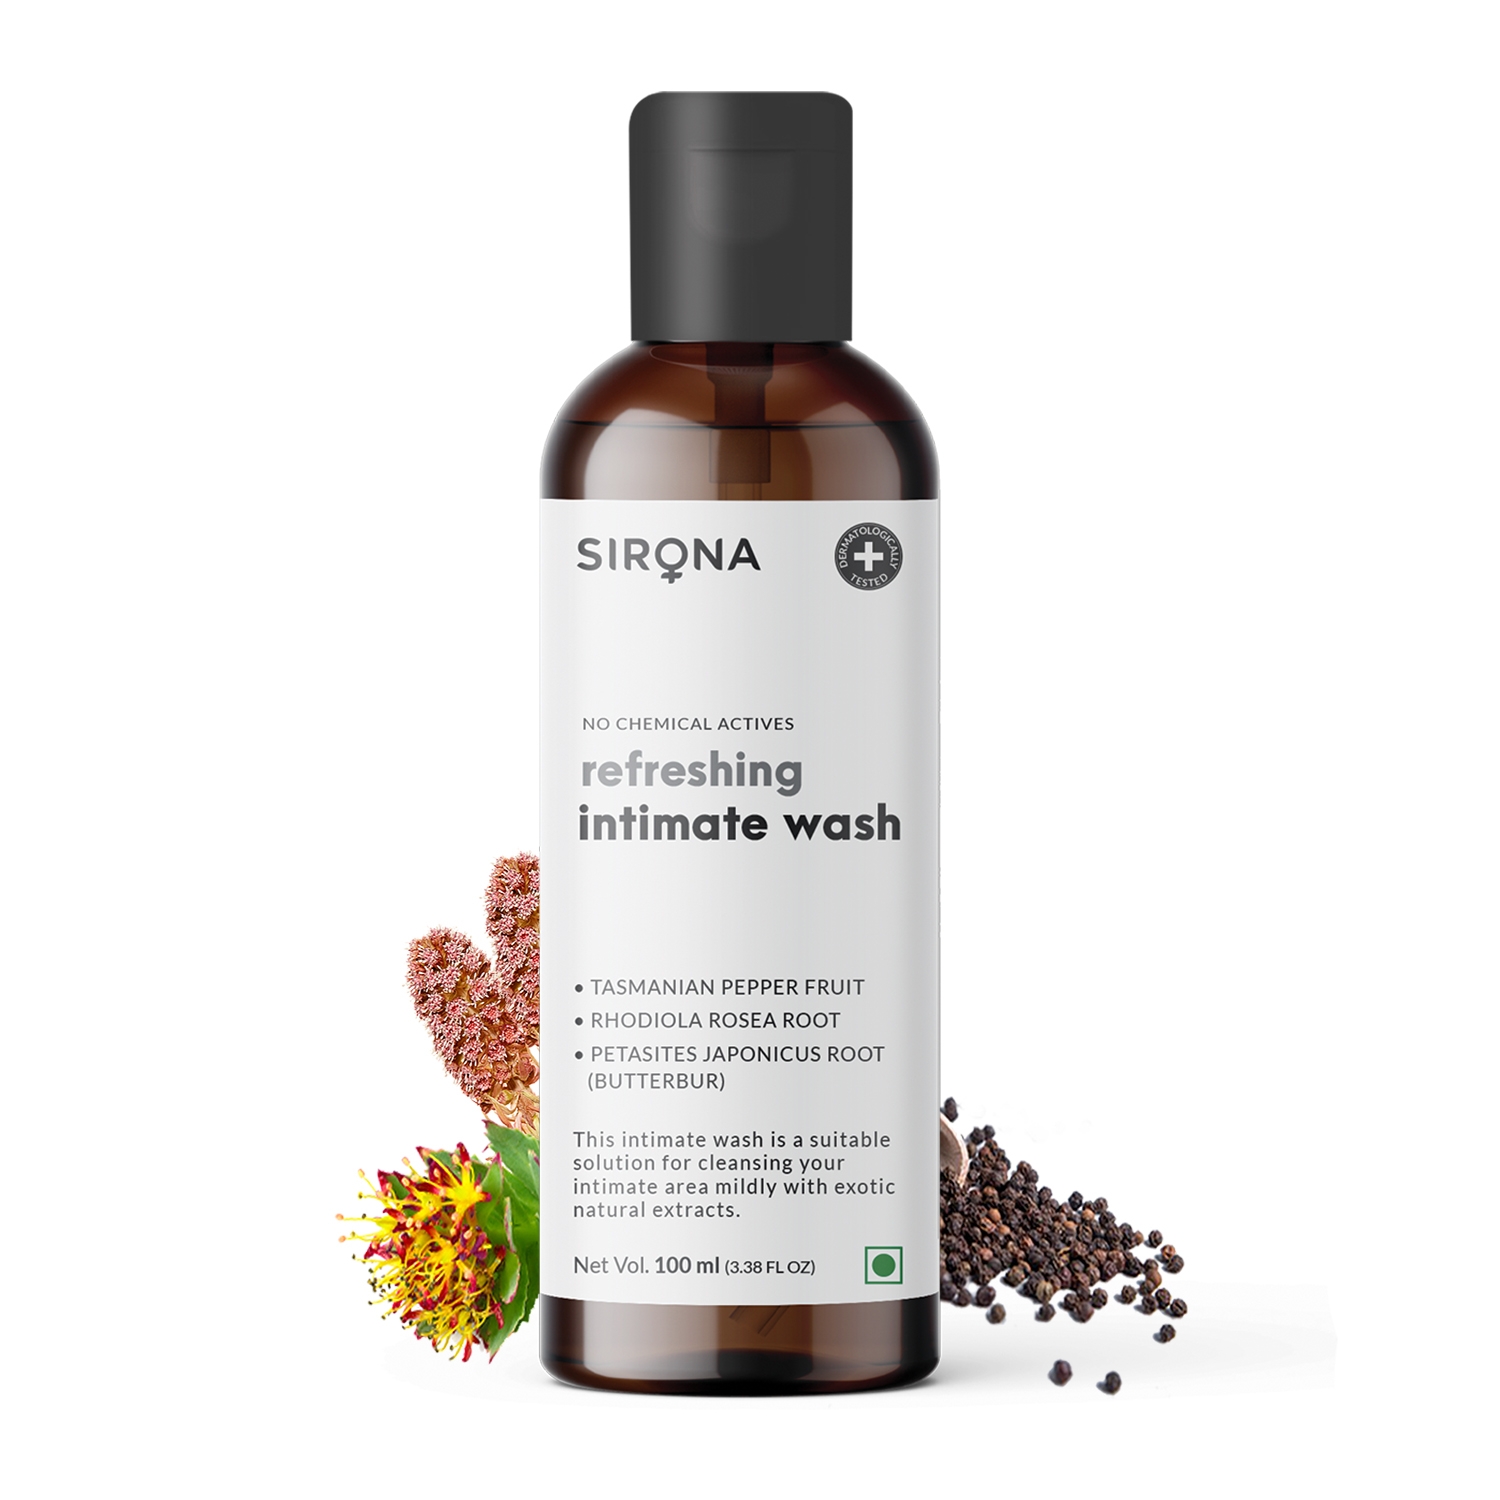 Sirona | Sirona Natural Ph Balanced Intimate Wash With 5 Magical Herbs & No Chemical Actives For Men And Women - 100 Ml 1